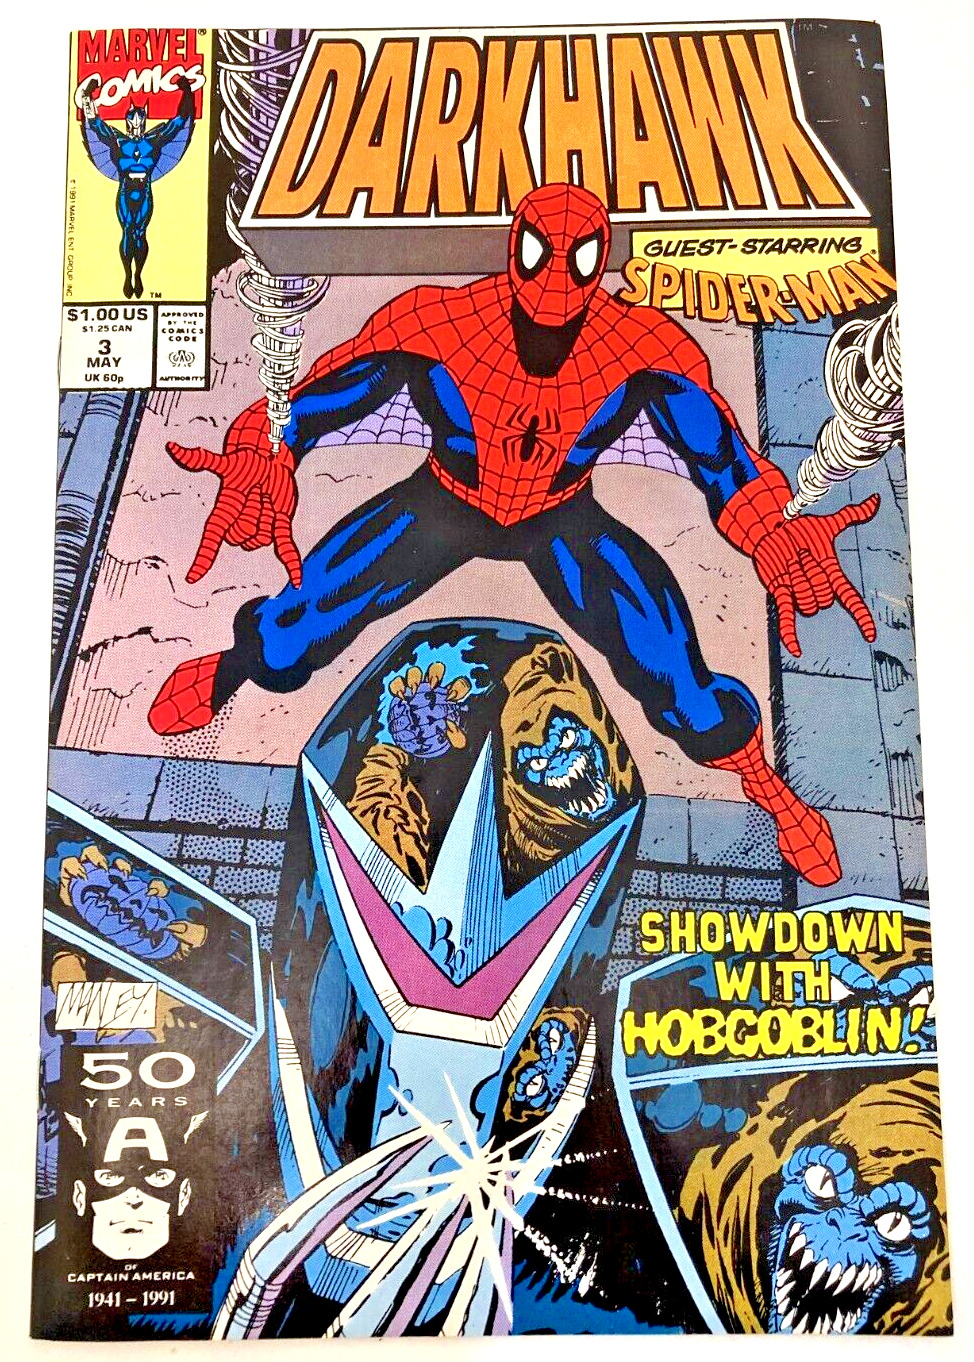 Darkhawk #3  MARVEL Comics 1991 VF